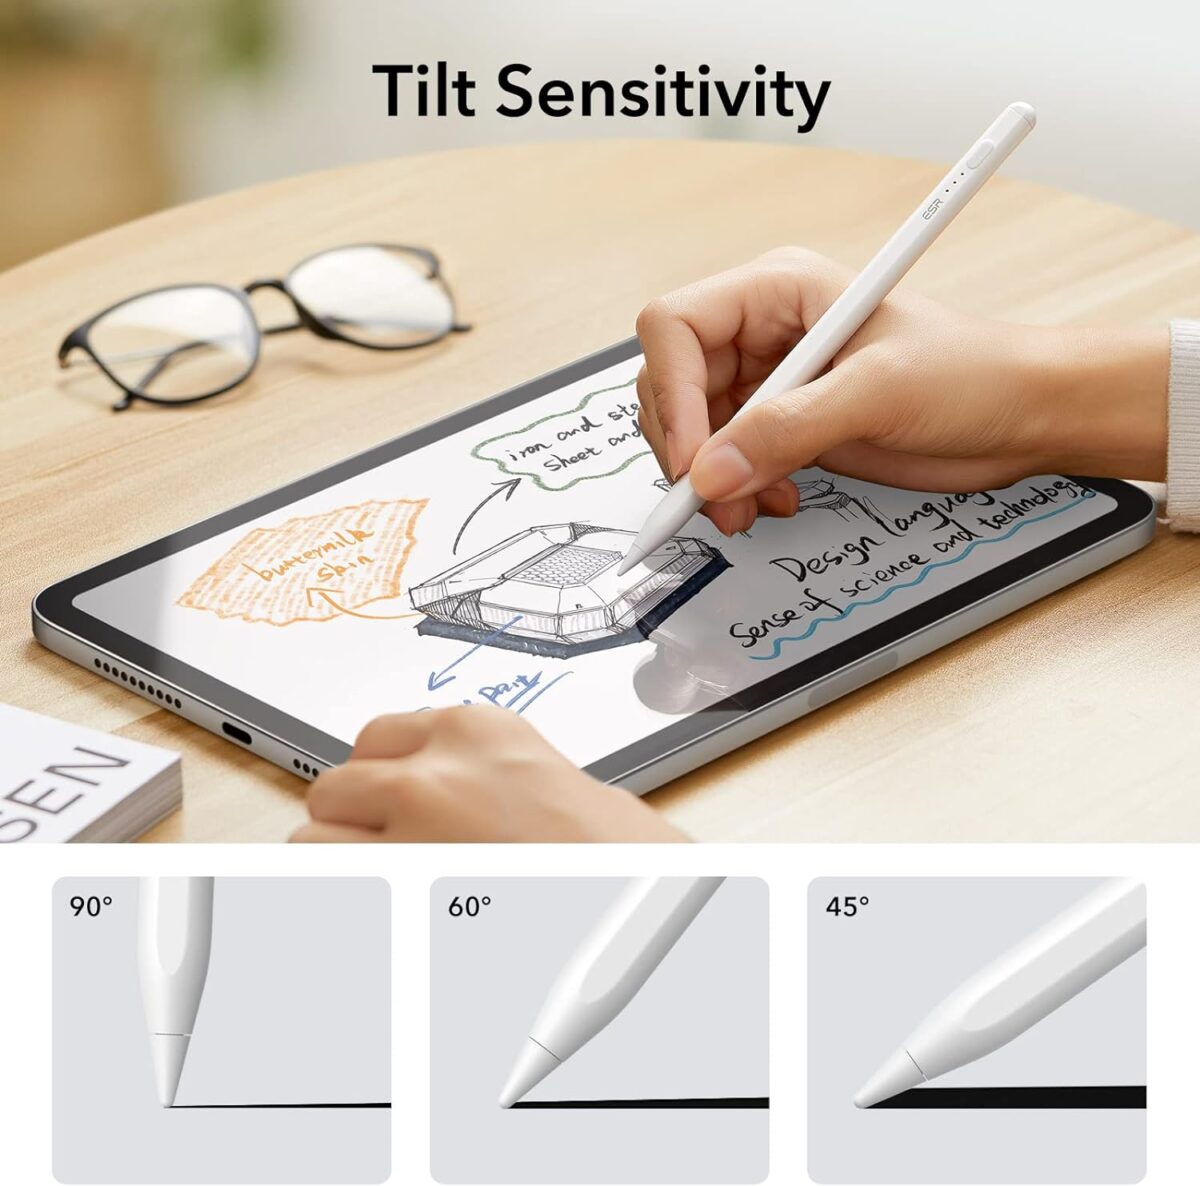 Stylus Pencil for iPad with tilt sensitivity